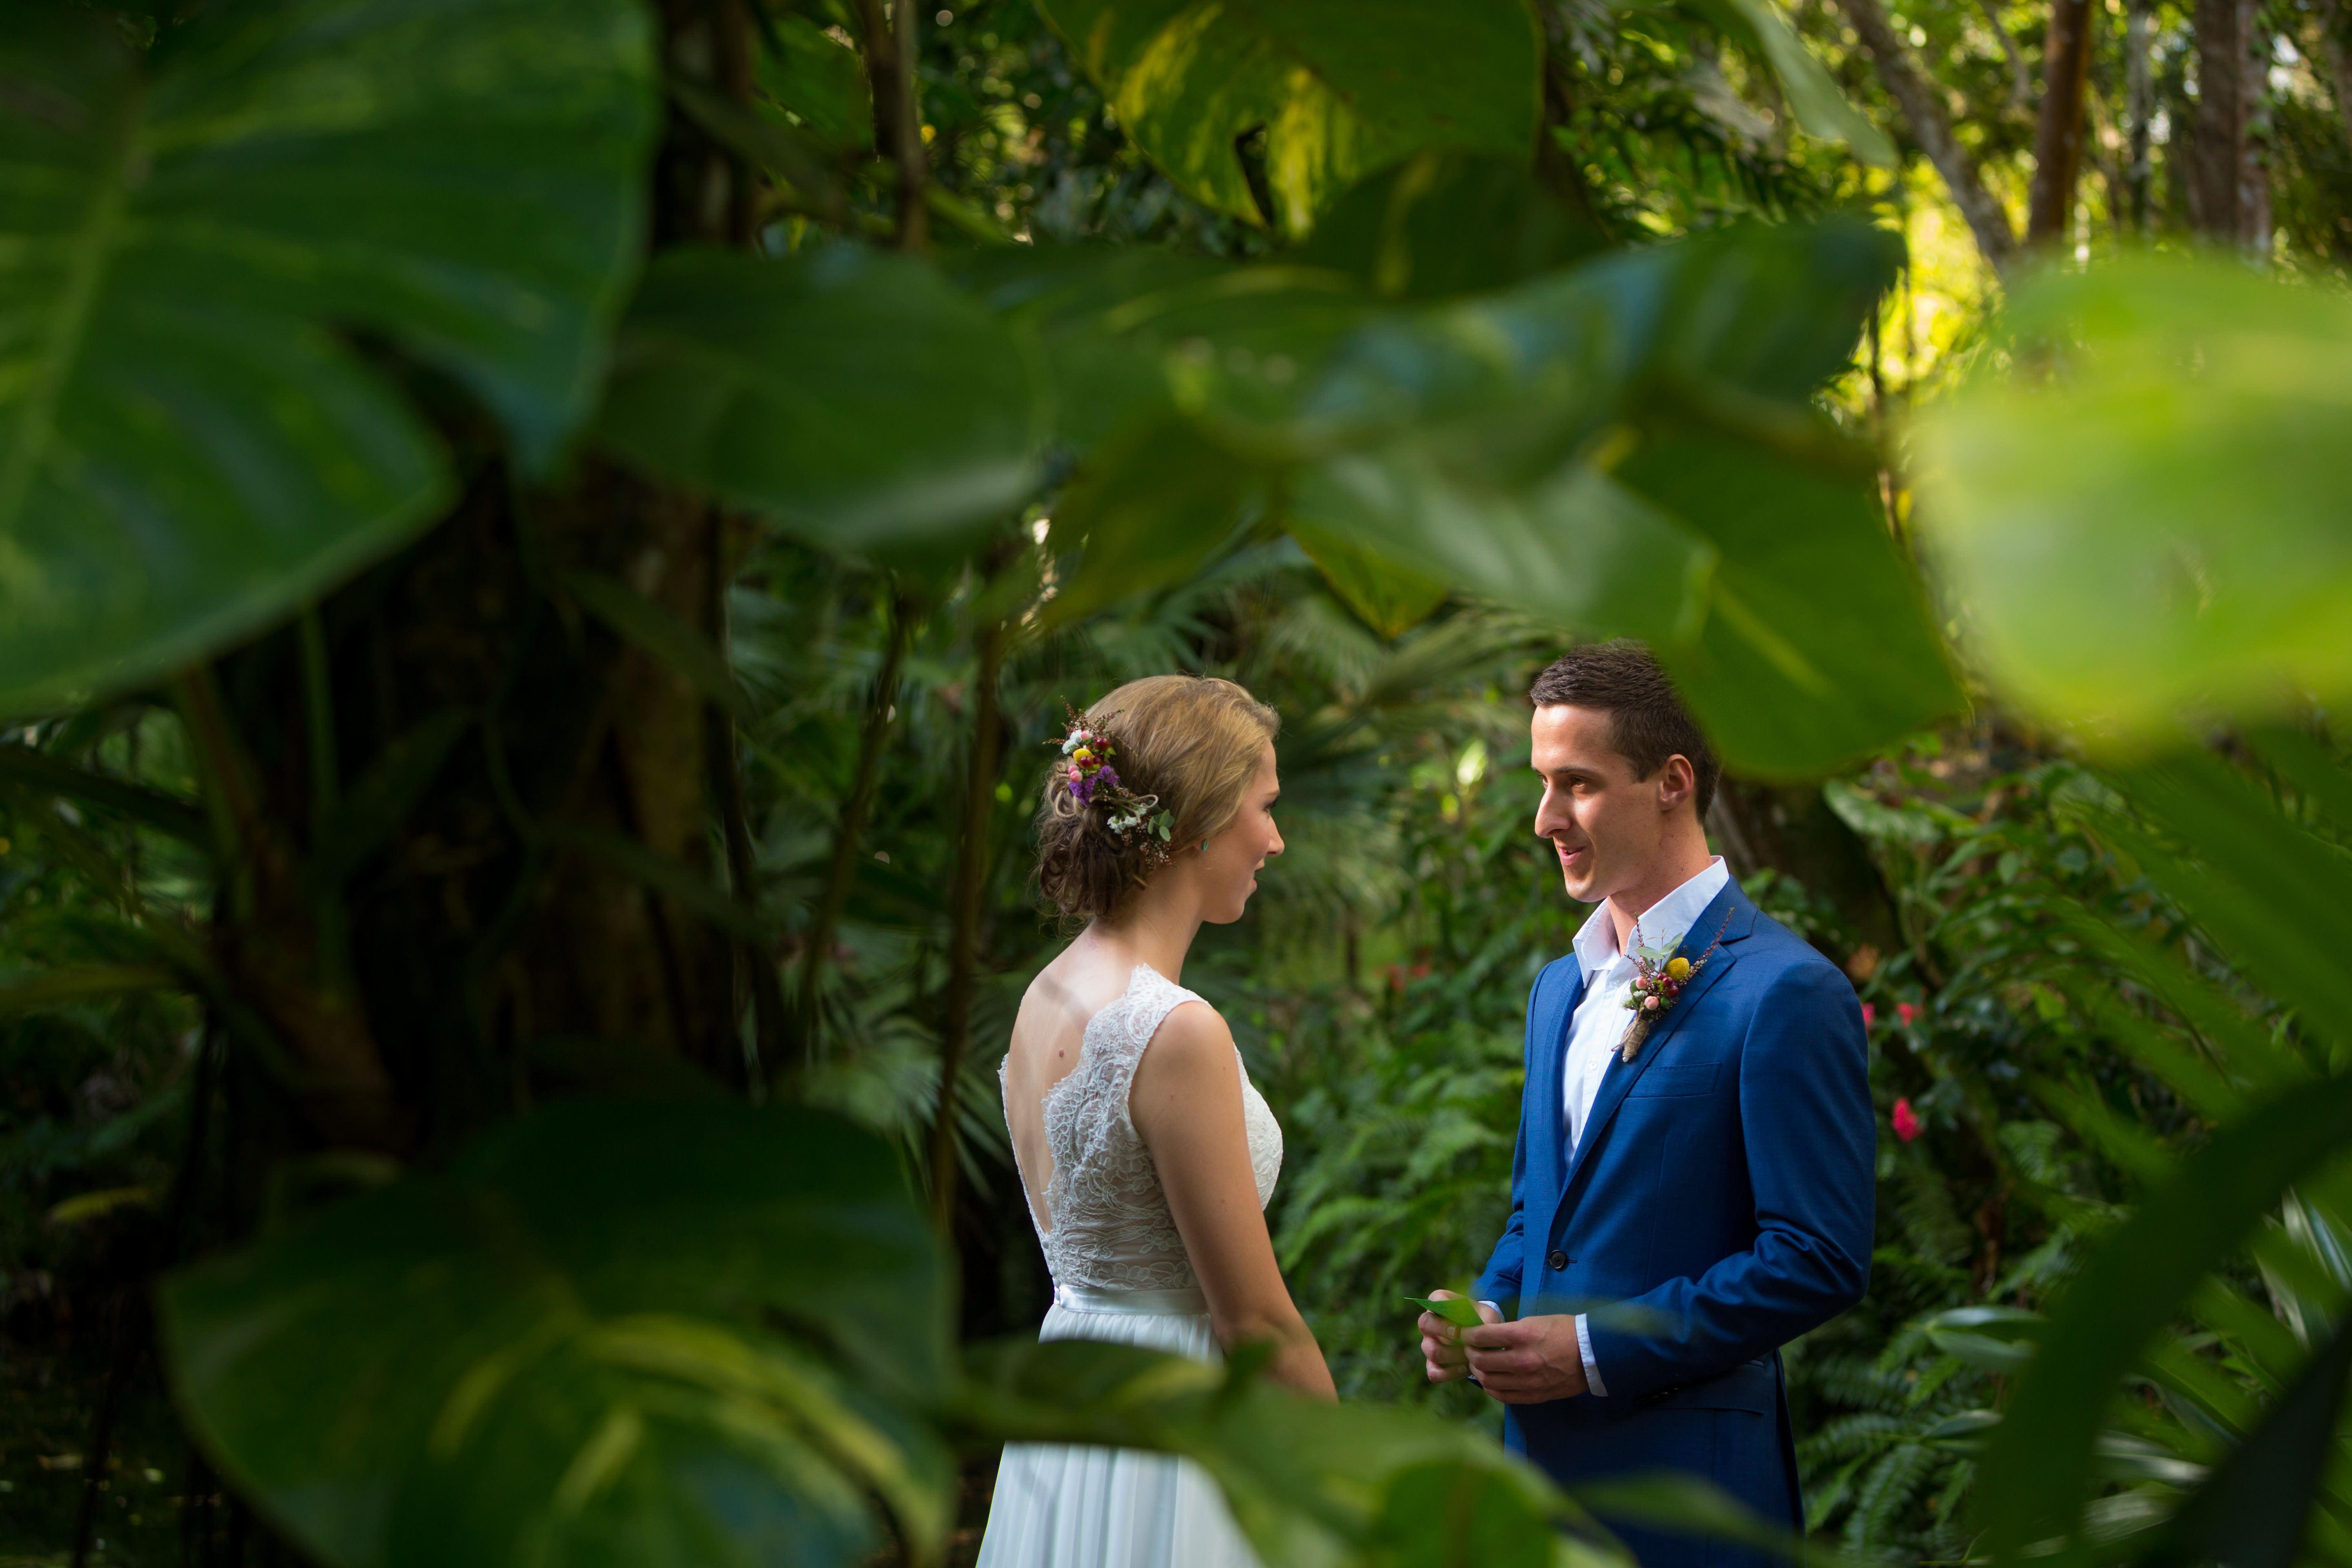 daintree rainforest wedding venue hire and accommodation